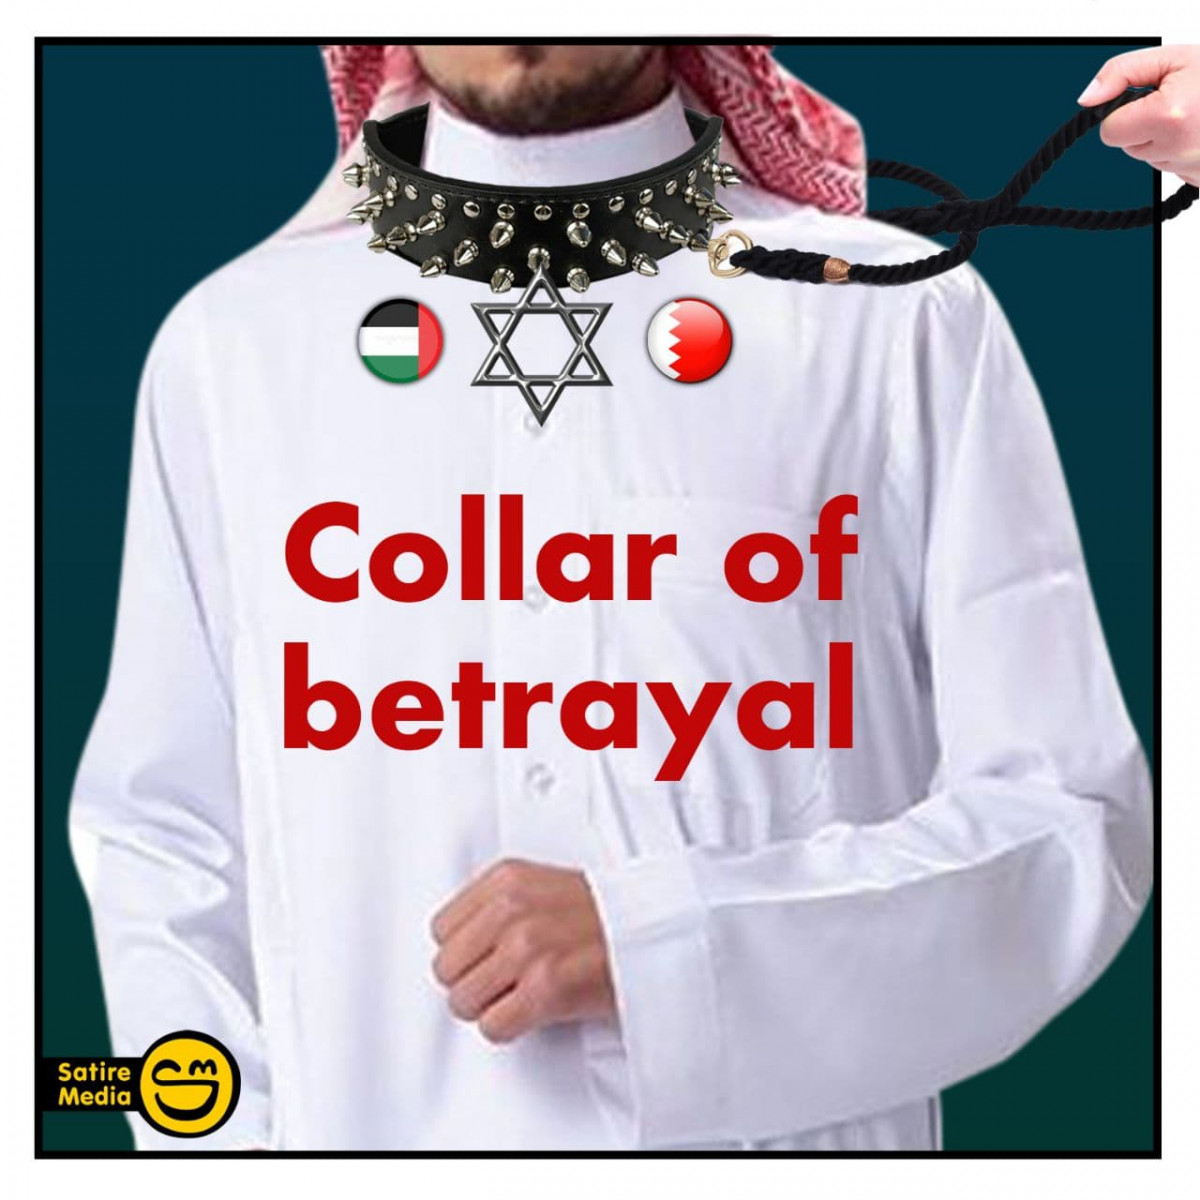 Collar of betrayal